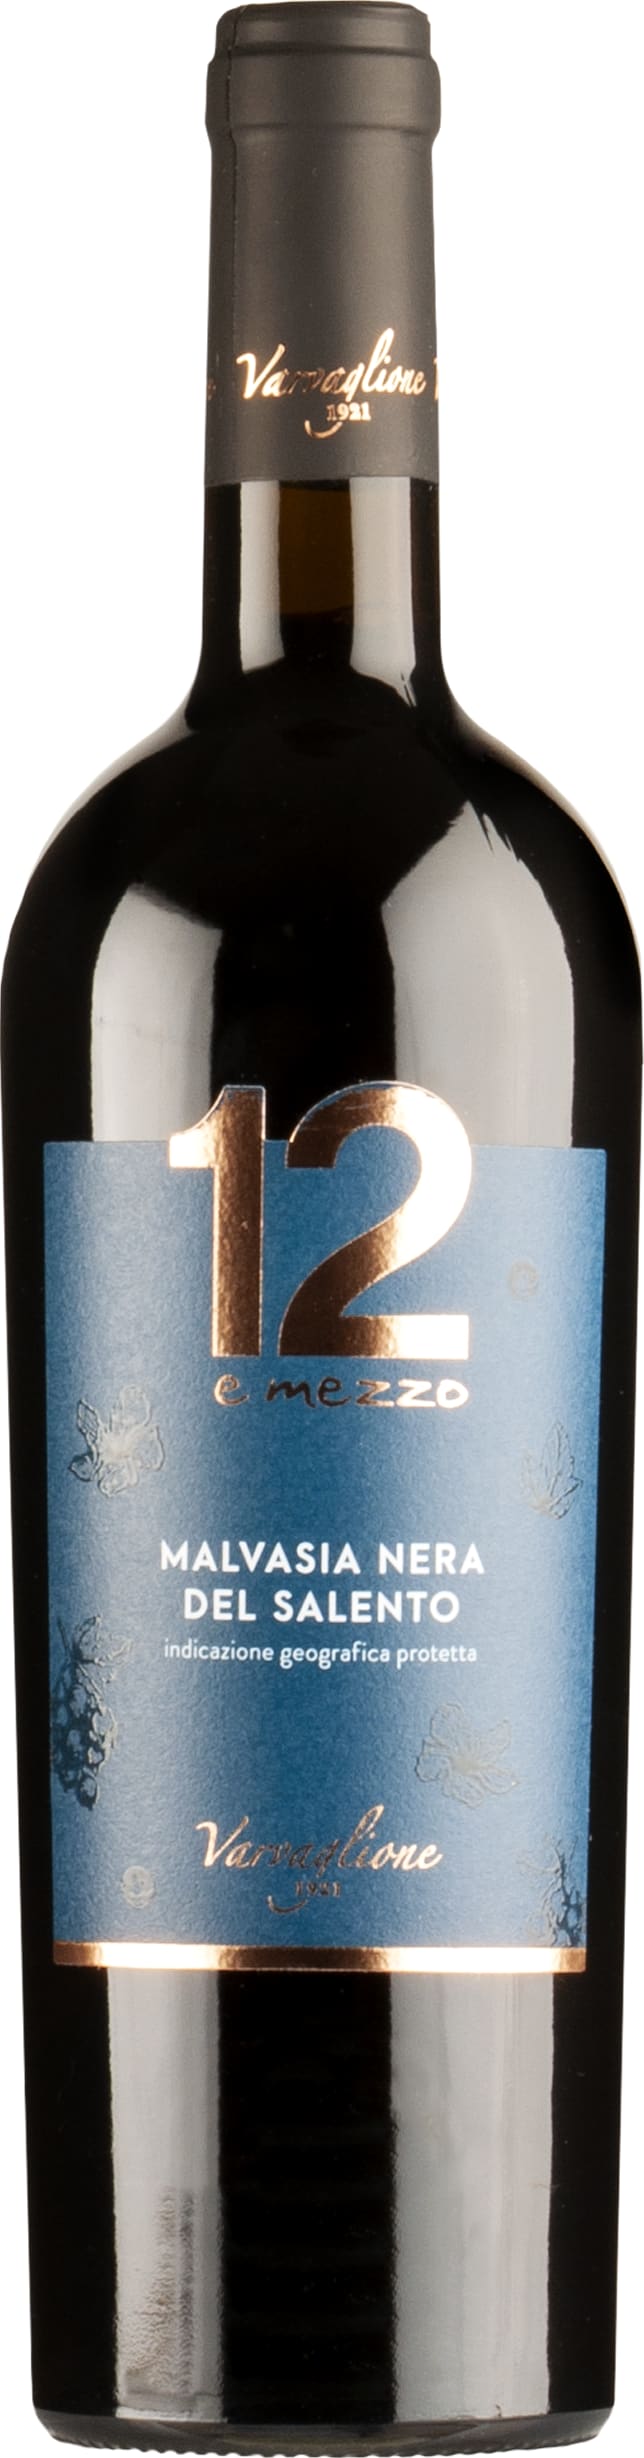 Varvaglione Malvasia Nera del Salento 2021 75cl - Buy Varvaglione Wines from GREAT WINES DIRECT wine shop